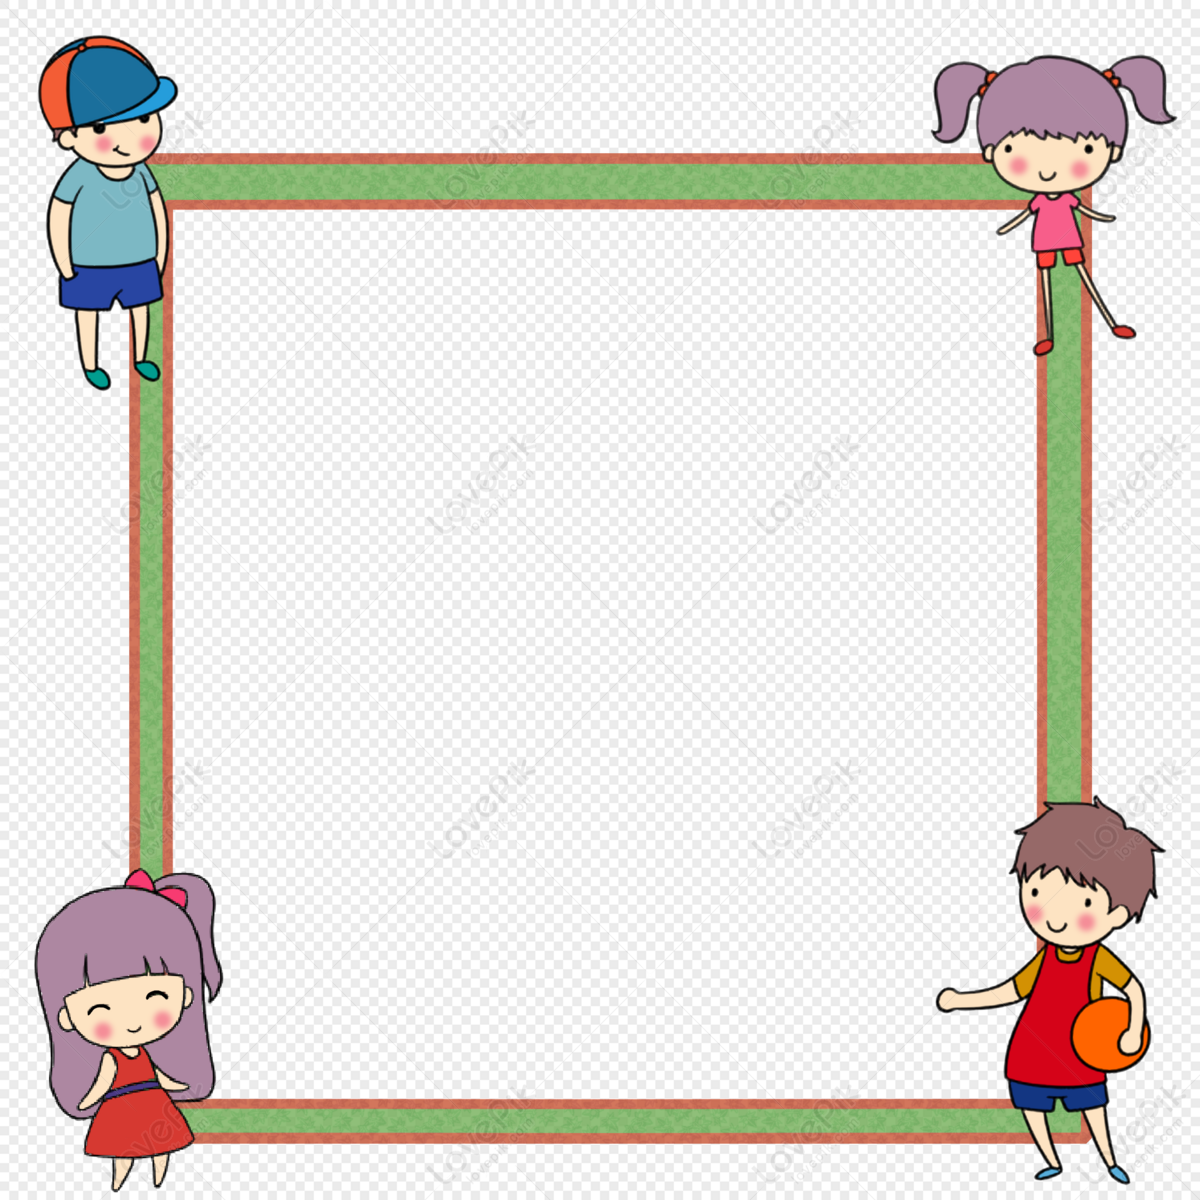 border line design for kids